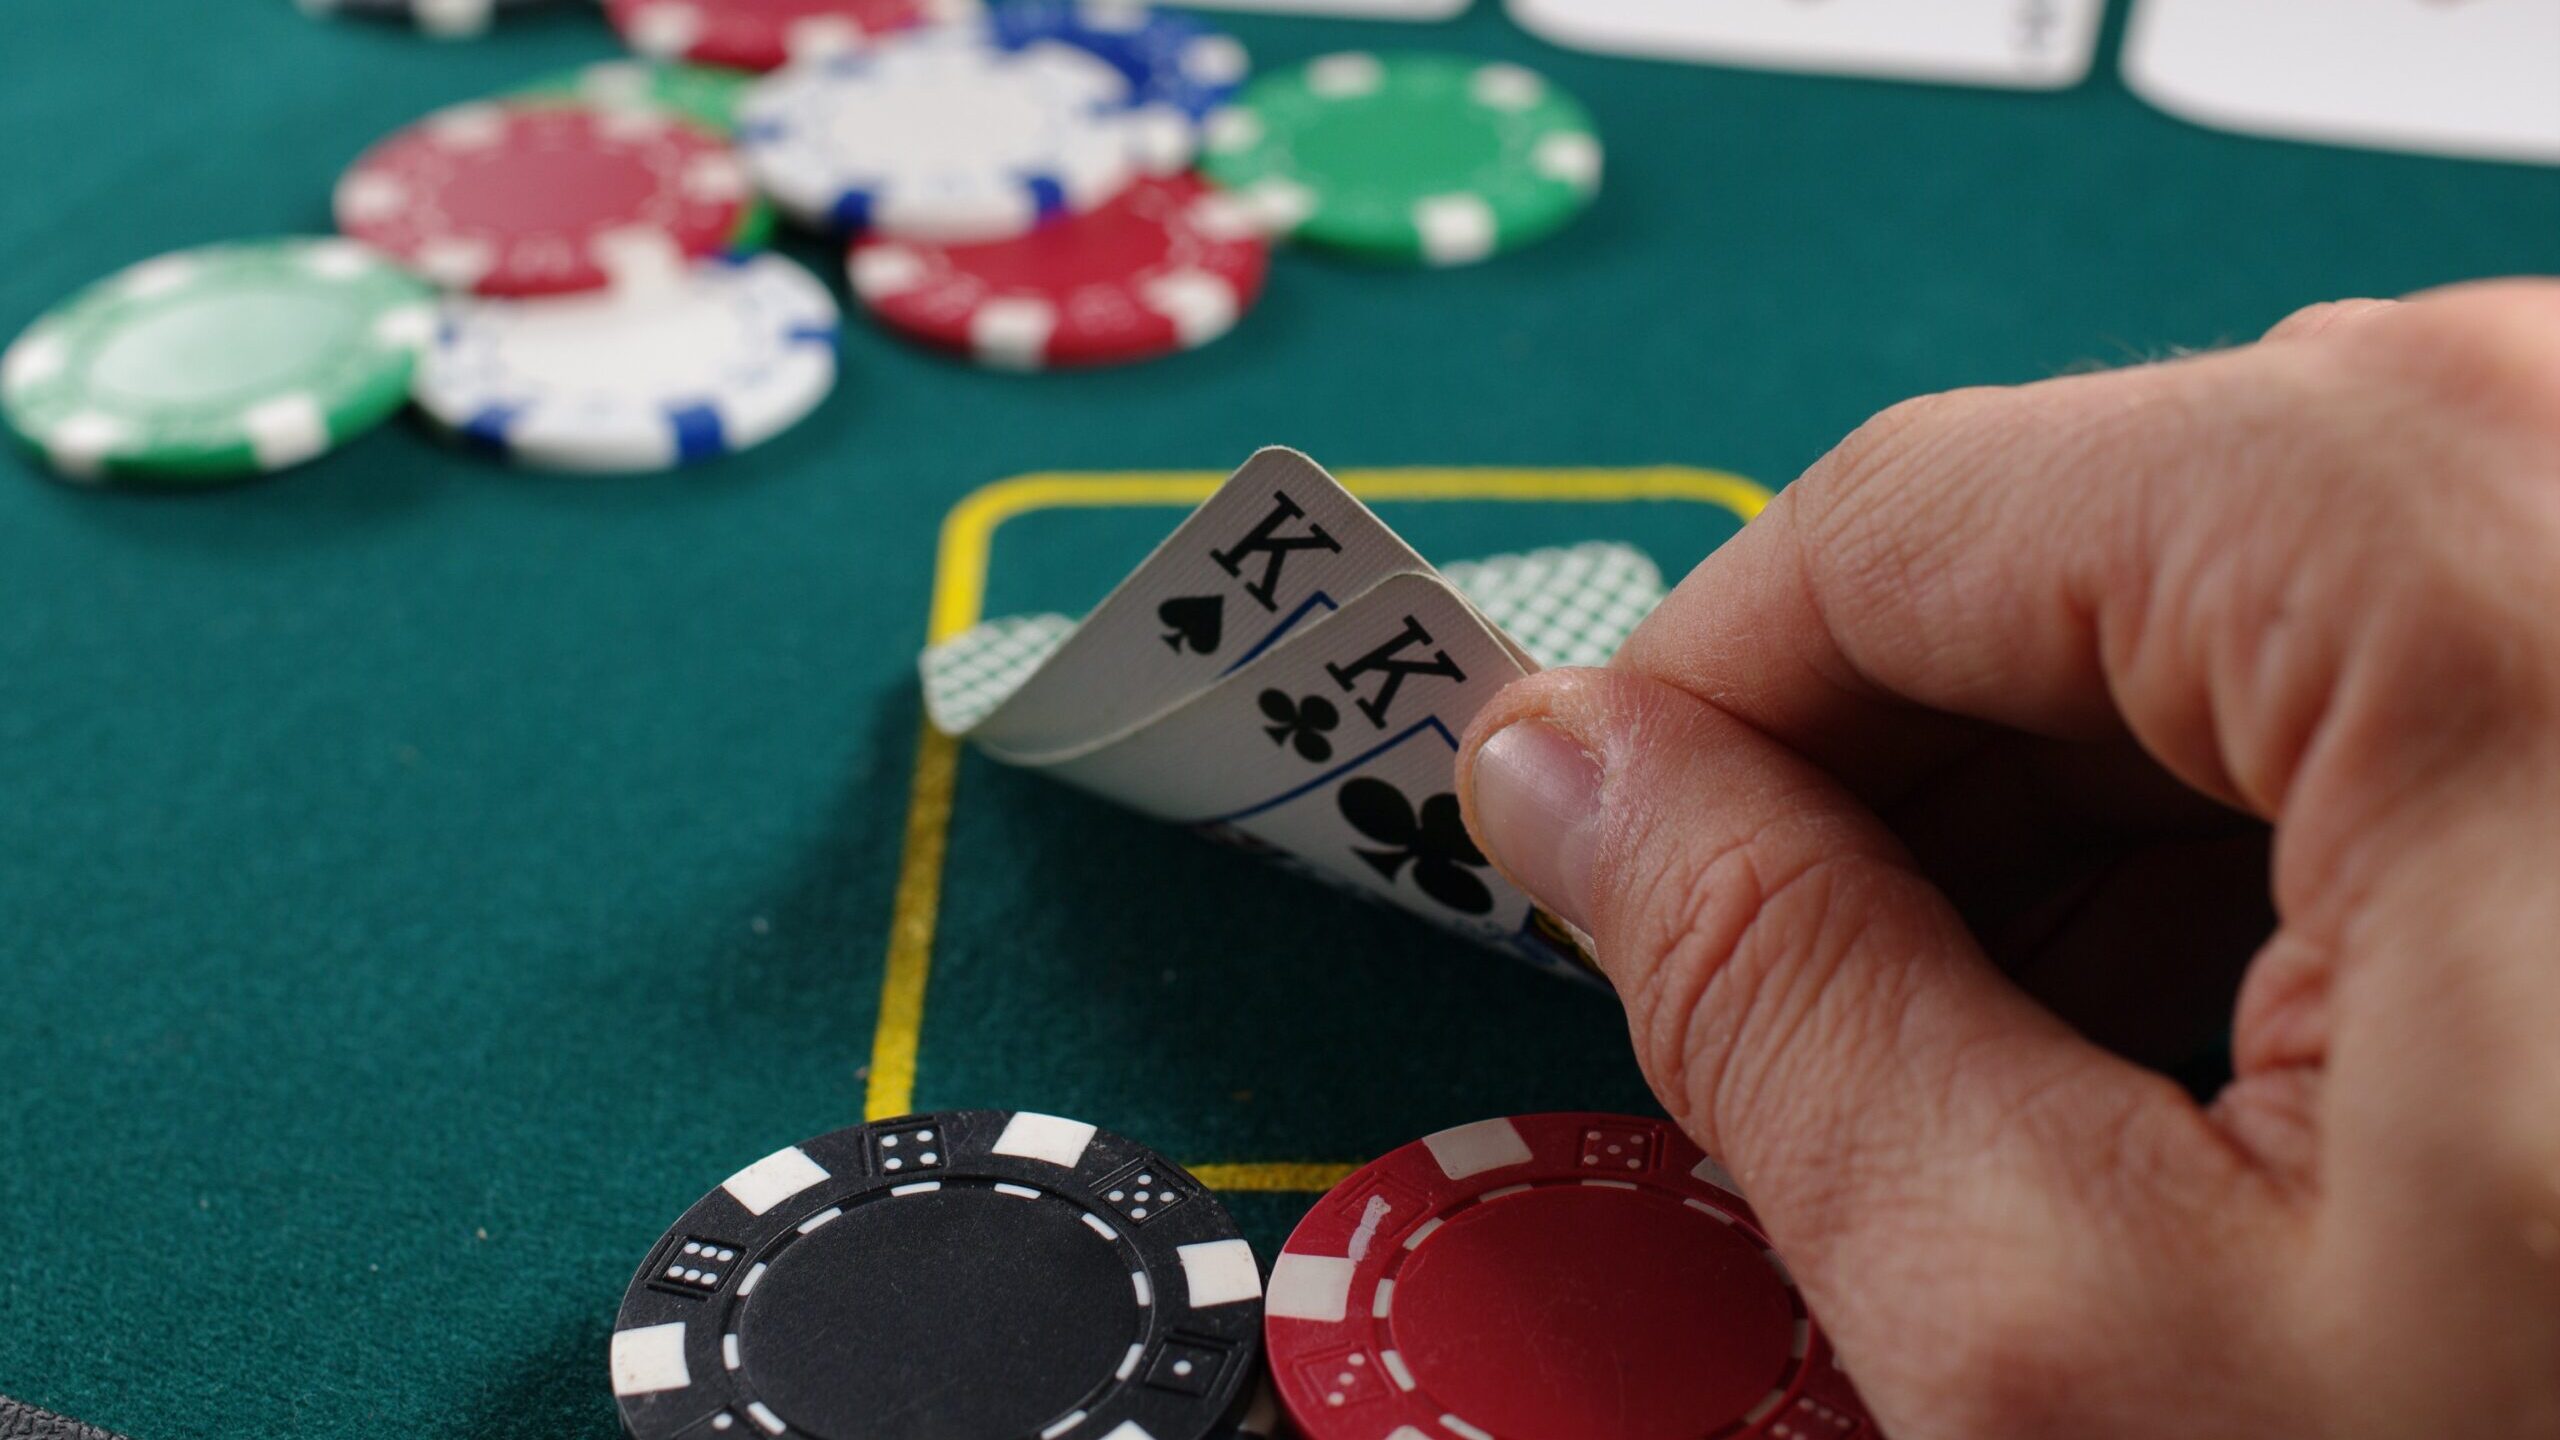 pocket-kings-poker-texas-holdem-chips-scaled-aspect-ratio-16-9